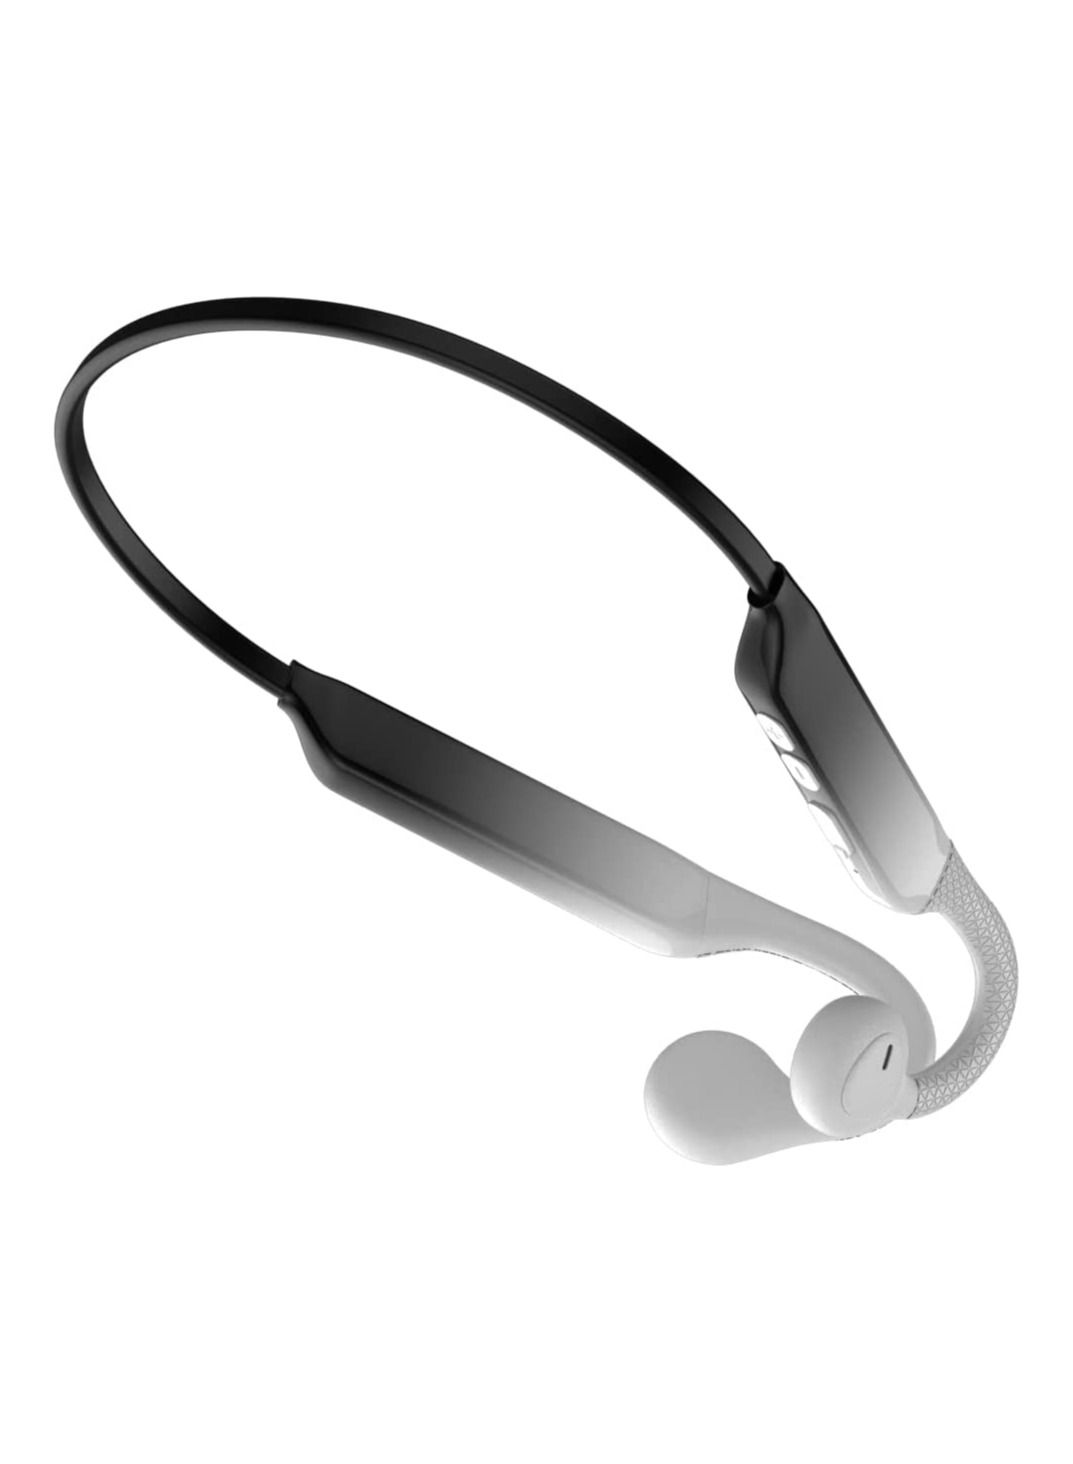 K9 Wireless Air Conduction Headphones